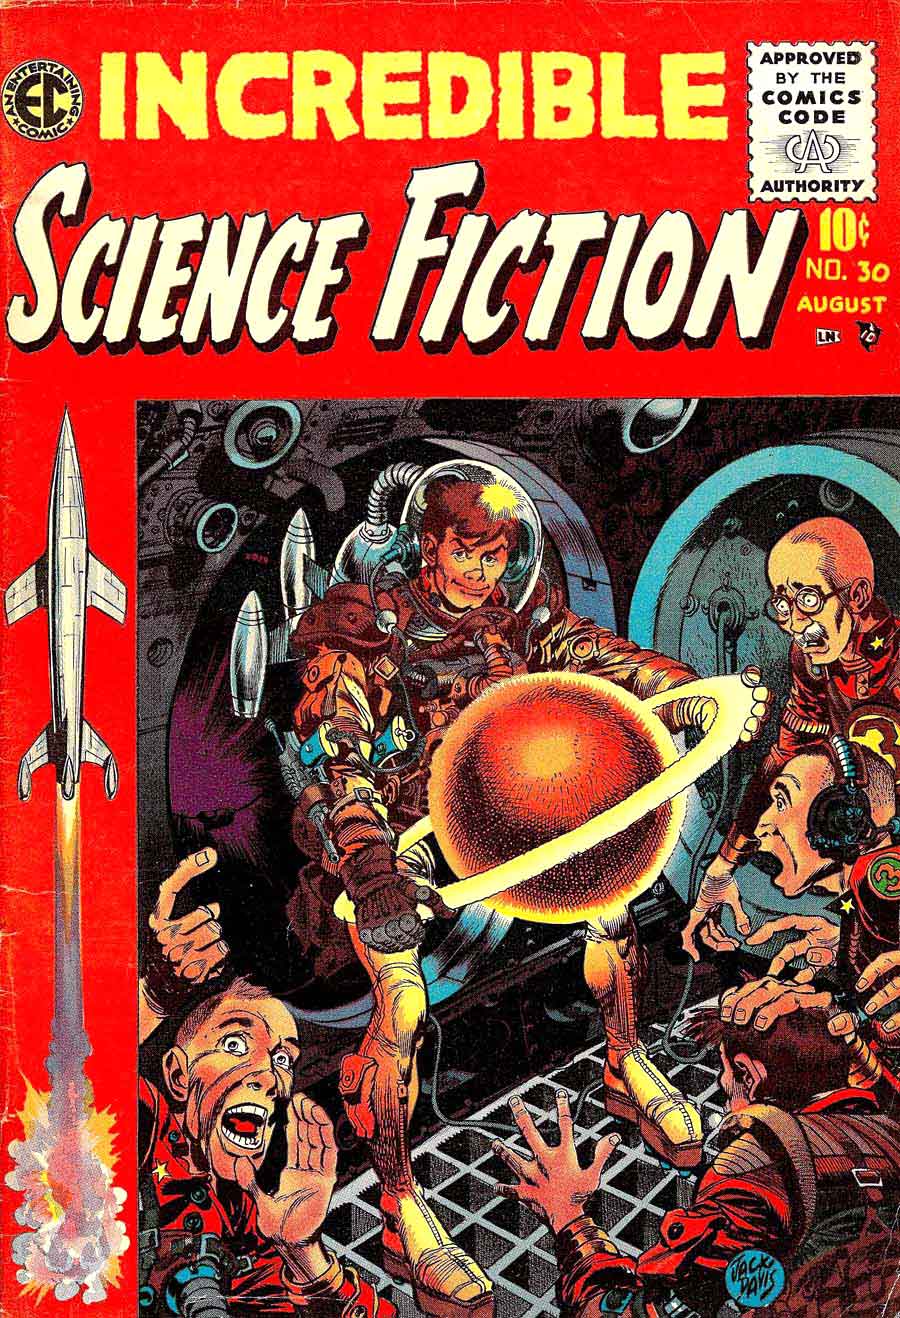 Jack Davis ec science fiction golden age 1950s comic book page - Incredible Science Fiction #30